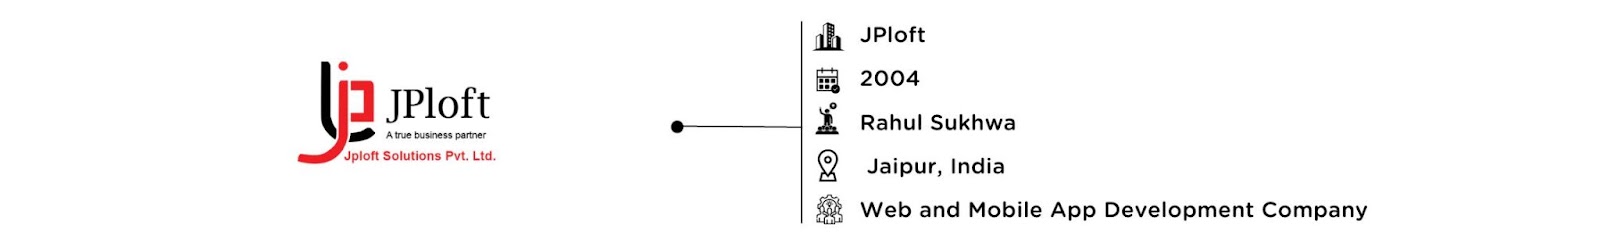 JPloft: Software Development Company in India